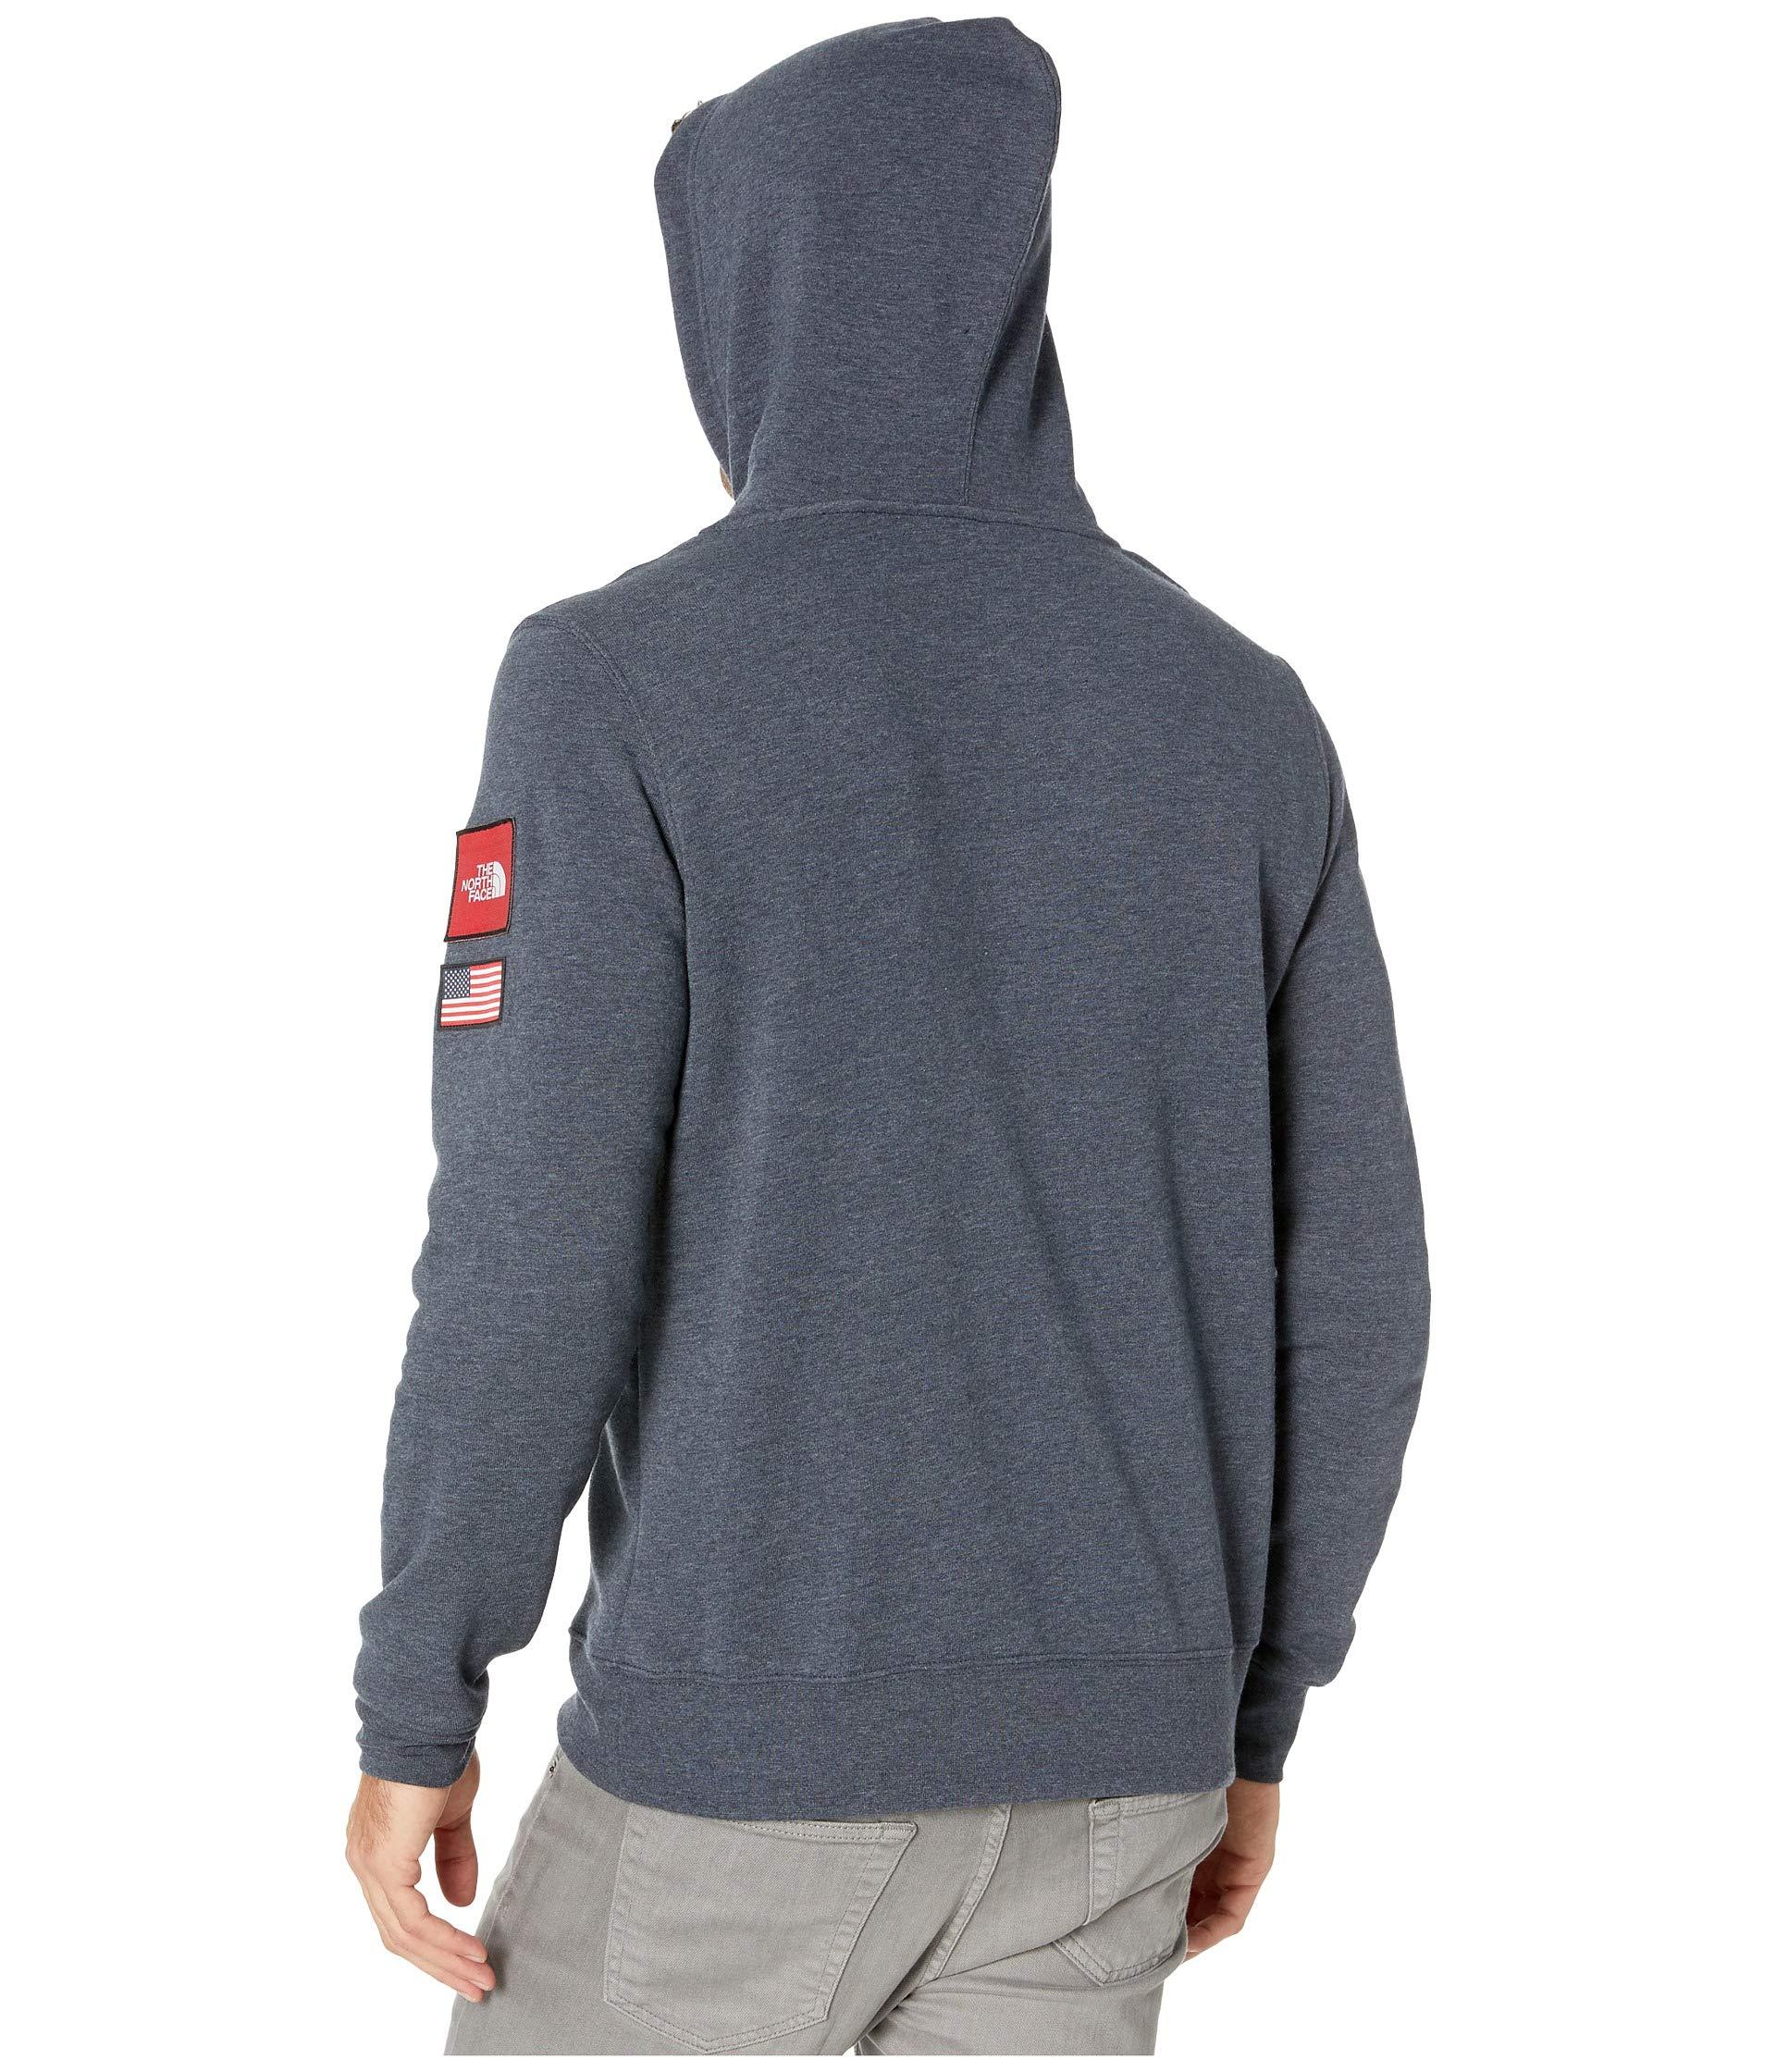 americana pullover hoodie | Sale 